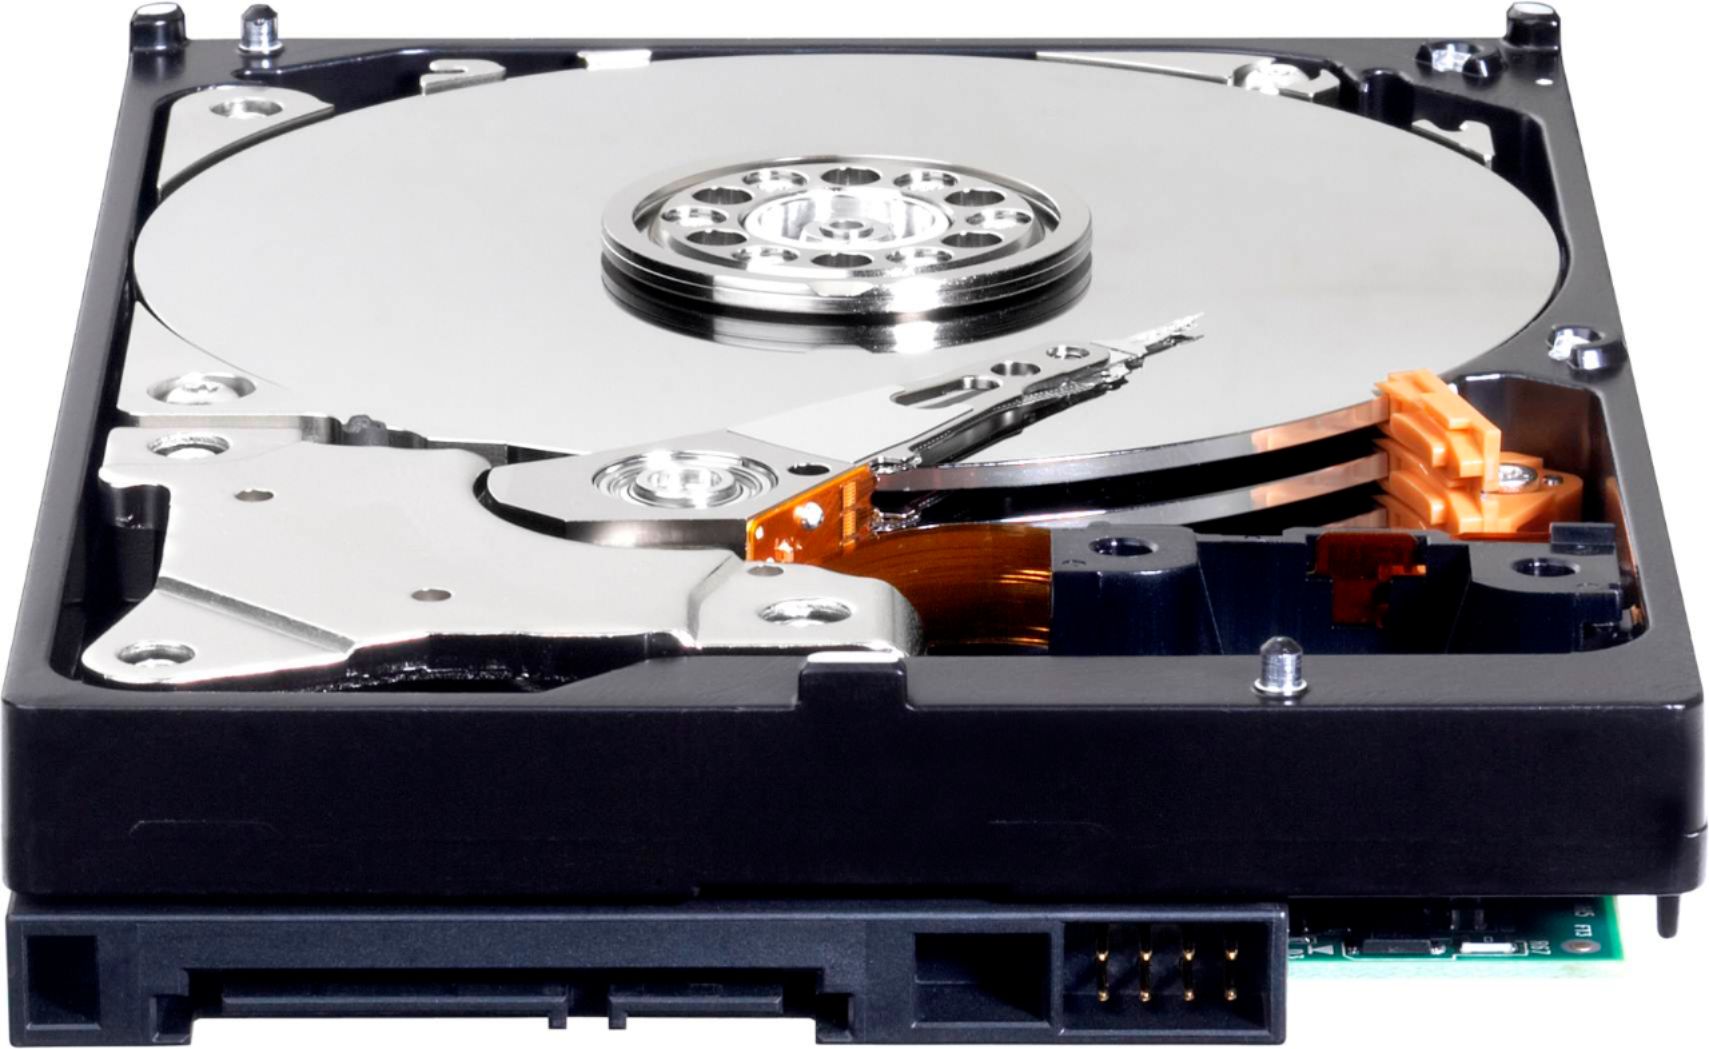 WD Mainstream 1TB Internal Serial ATA Hard Drive for Desktops 